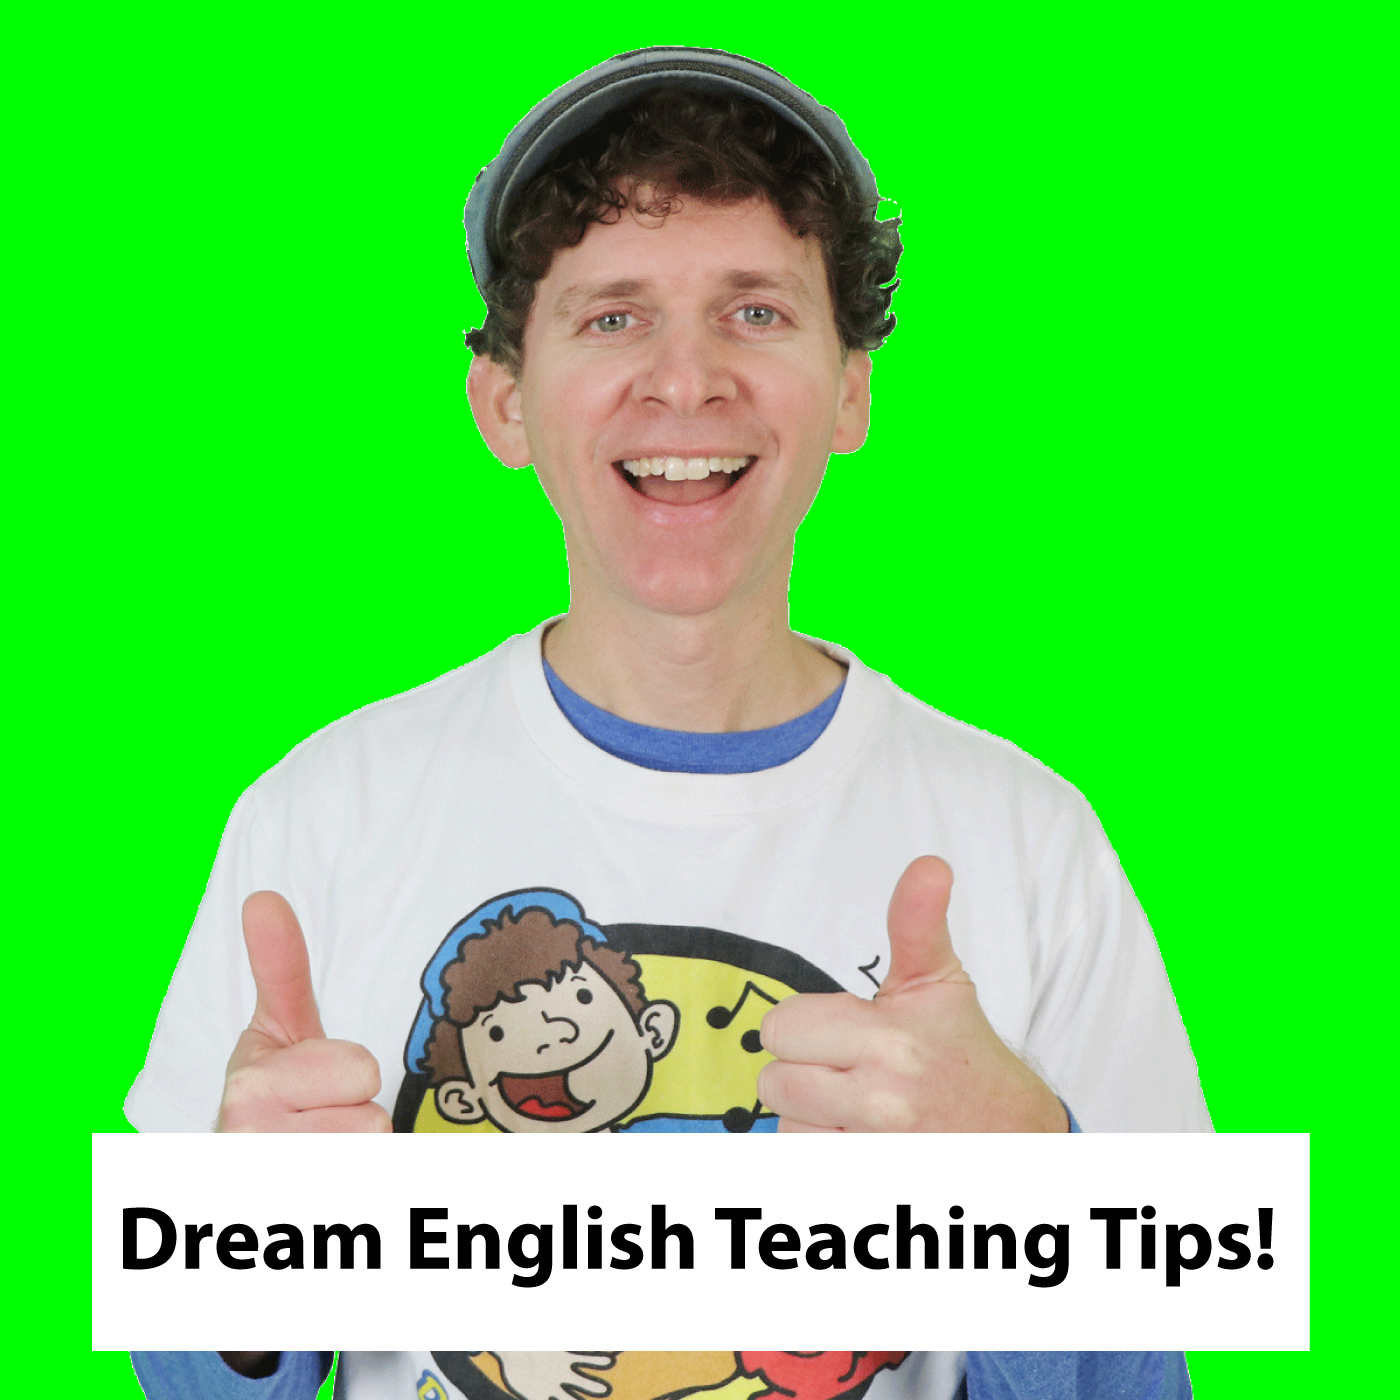 Teacher Talk - Six Questions with Greg from Fun Kids English